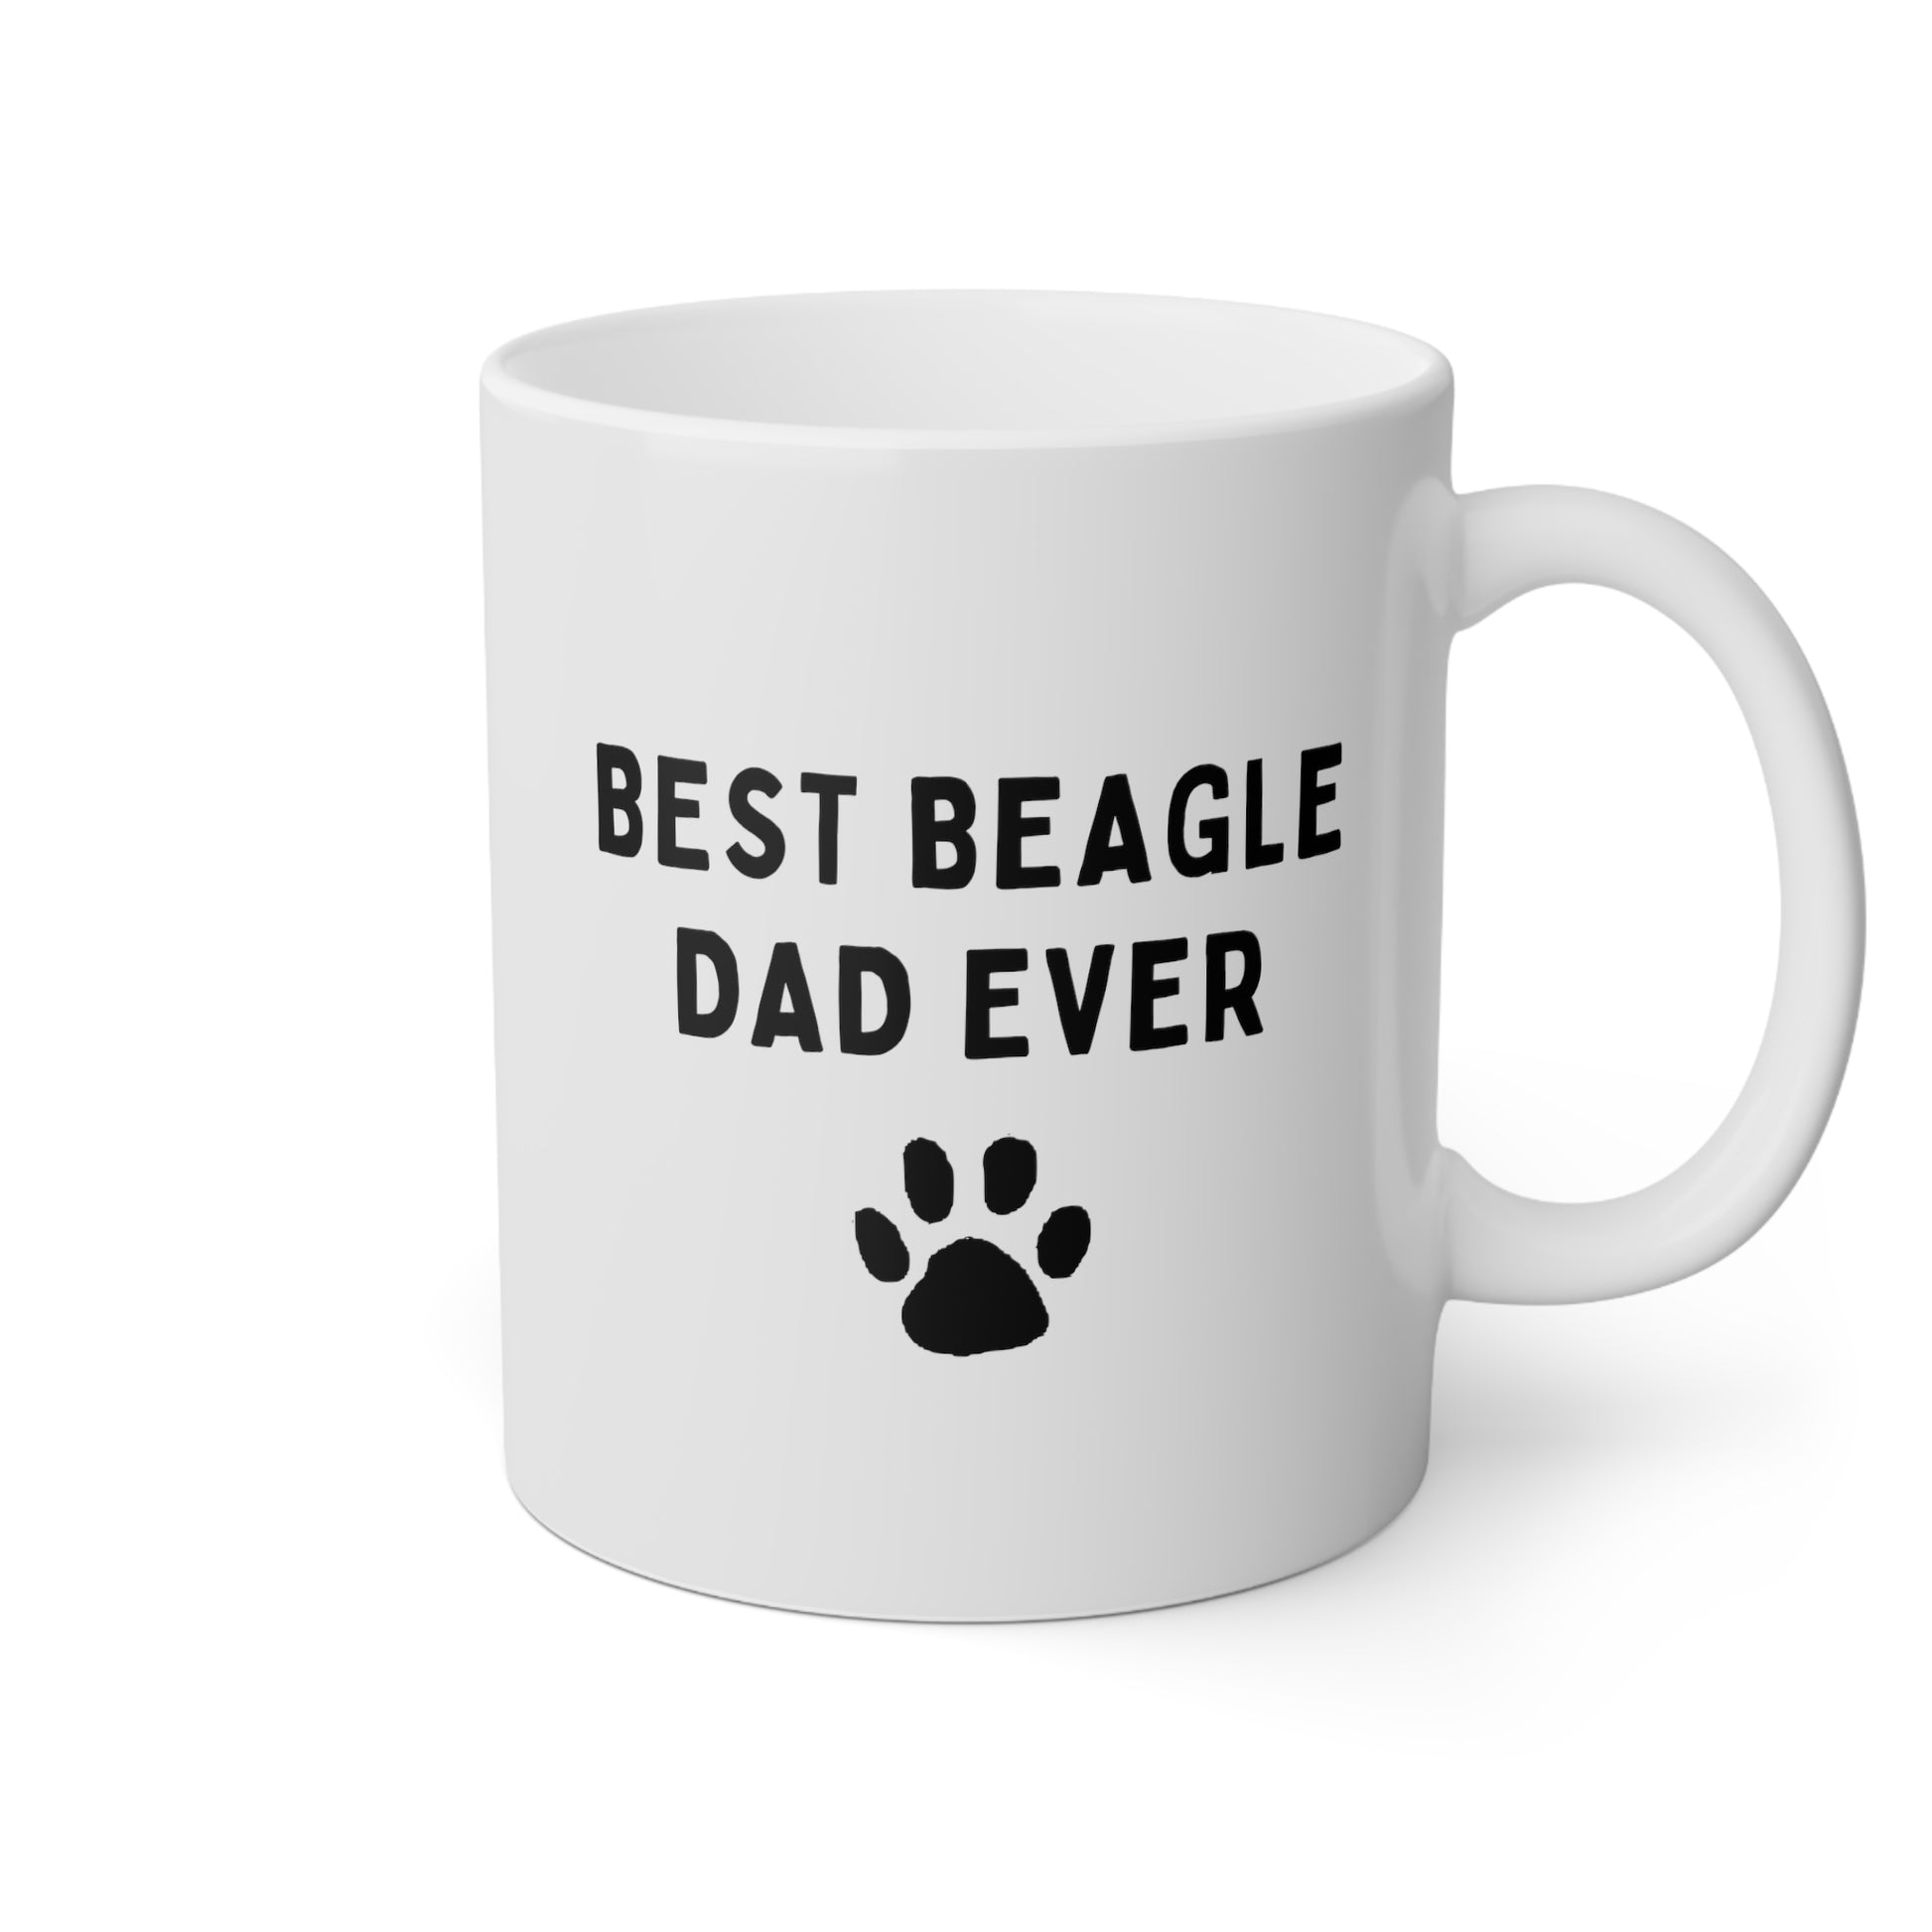 Best Beagle Dad Ever 11oz white funny large coffee mug gift for father's day him granddad dog lover pet owner furparent waveywares wavey wares wavywares wavy wares